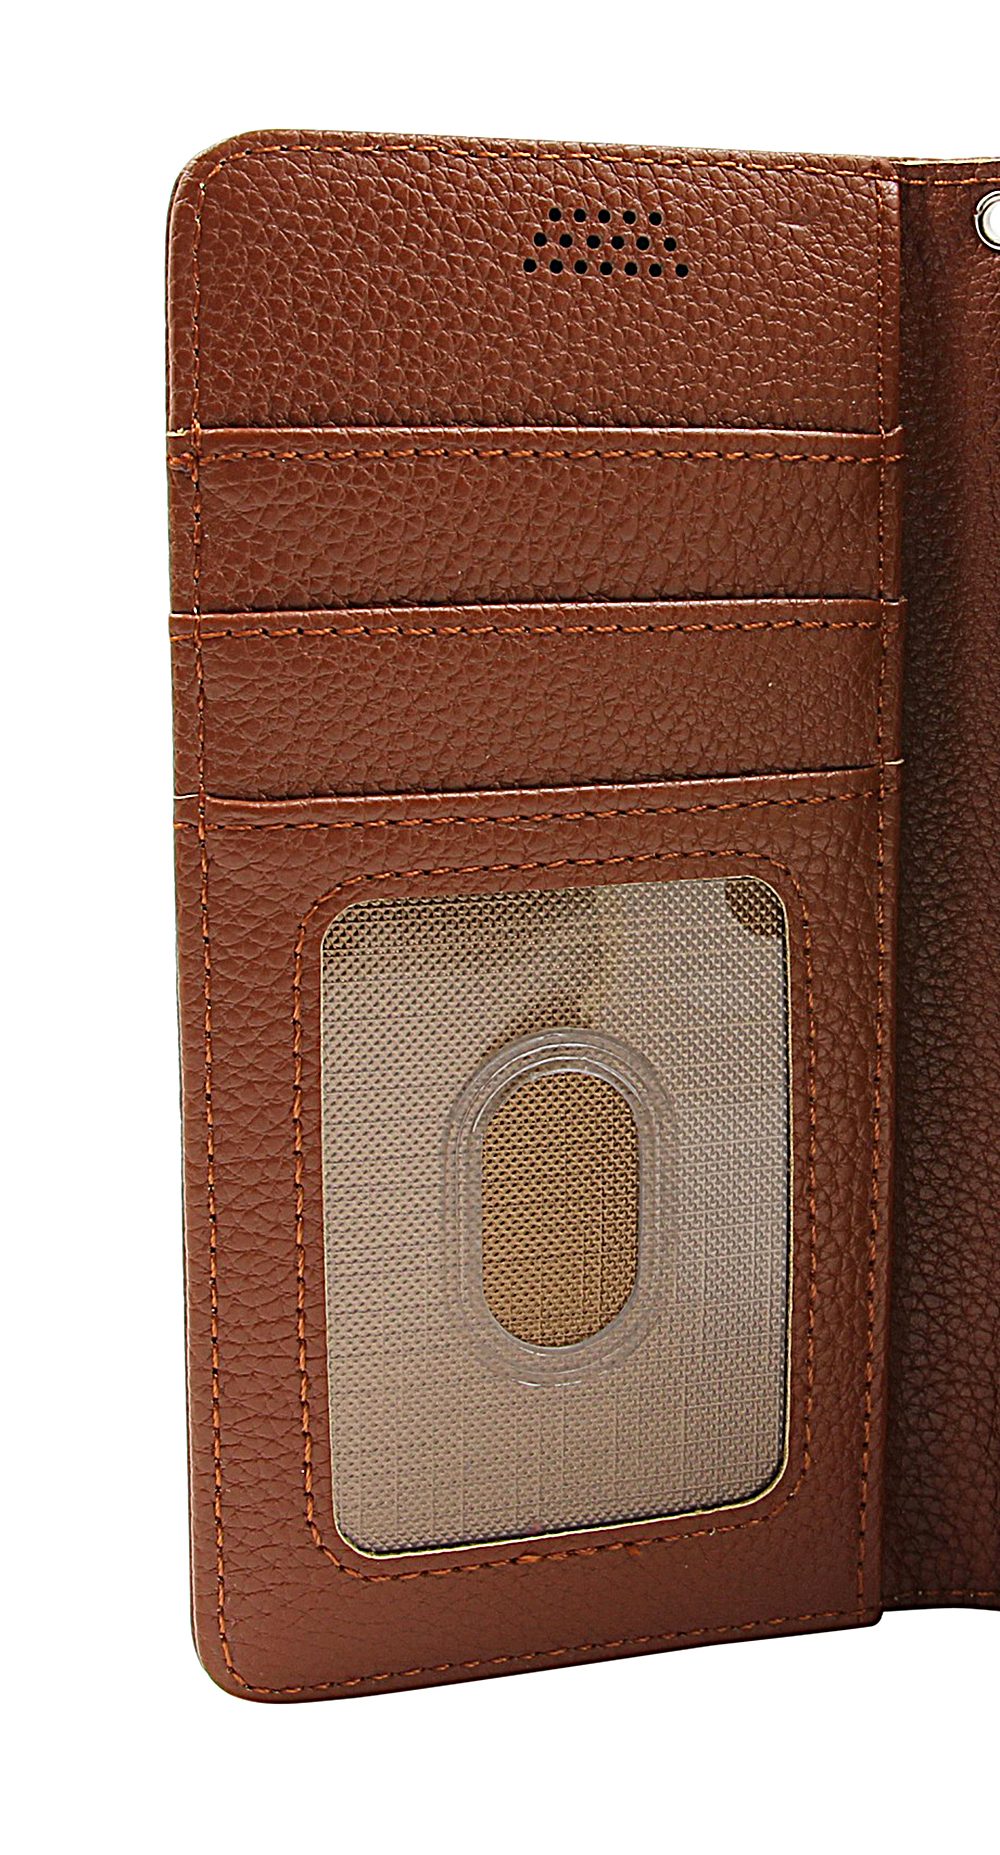 New Standcase Wallet Motorola Edge 30 Fusion 5G